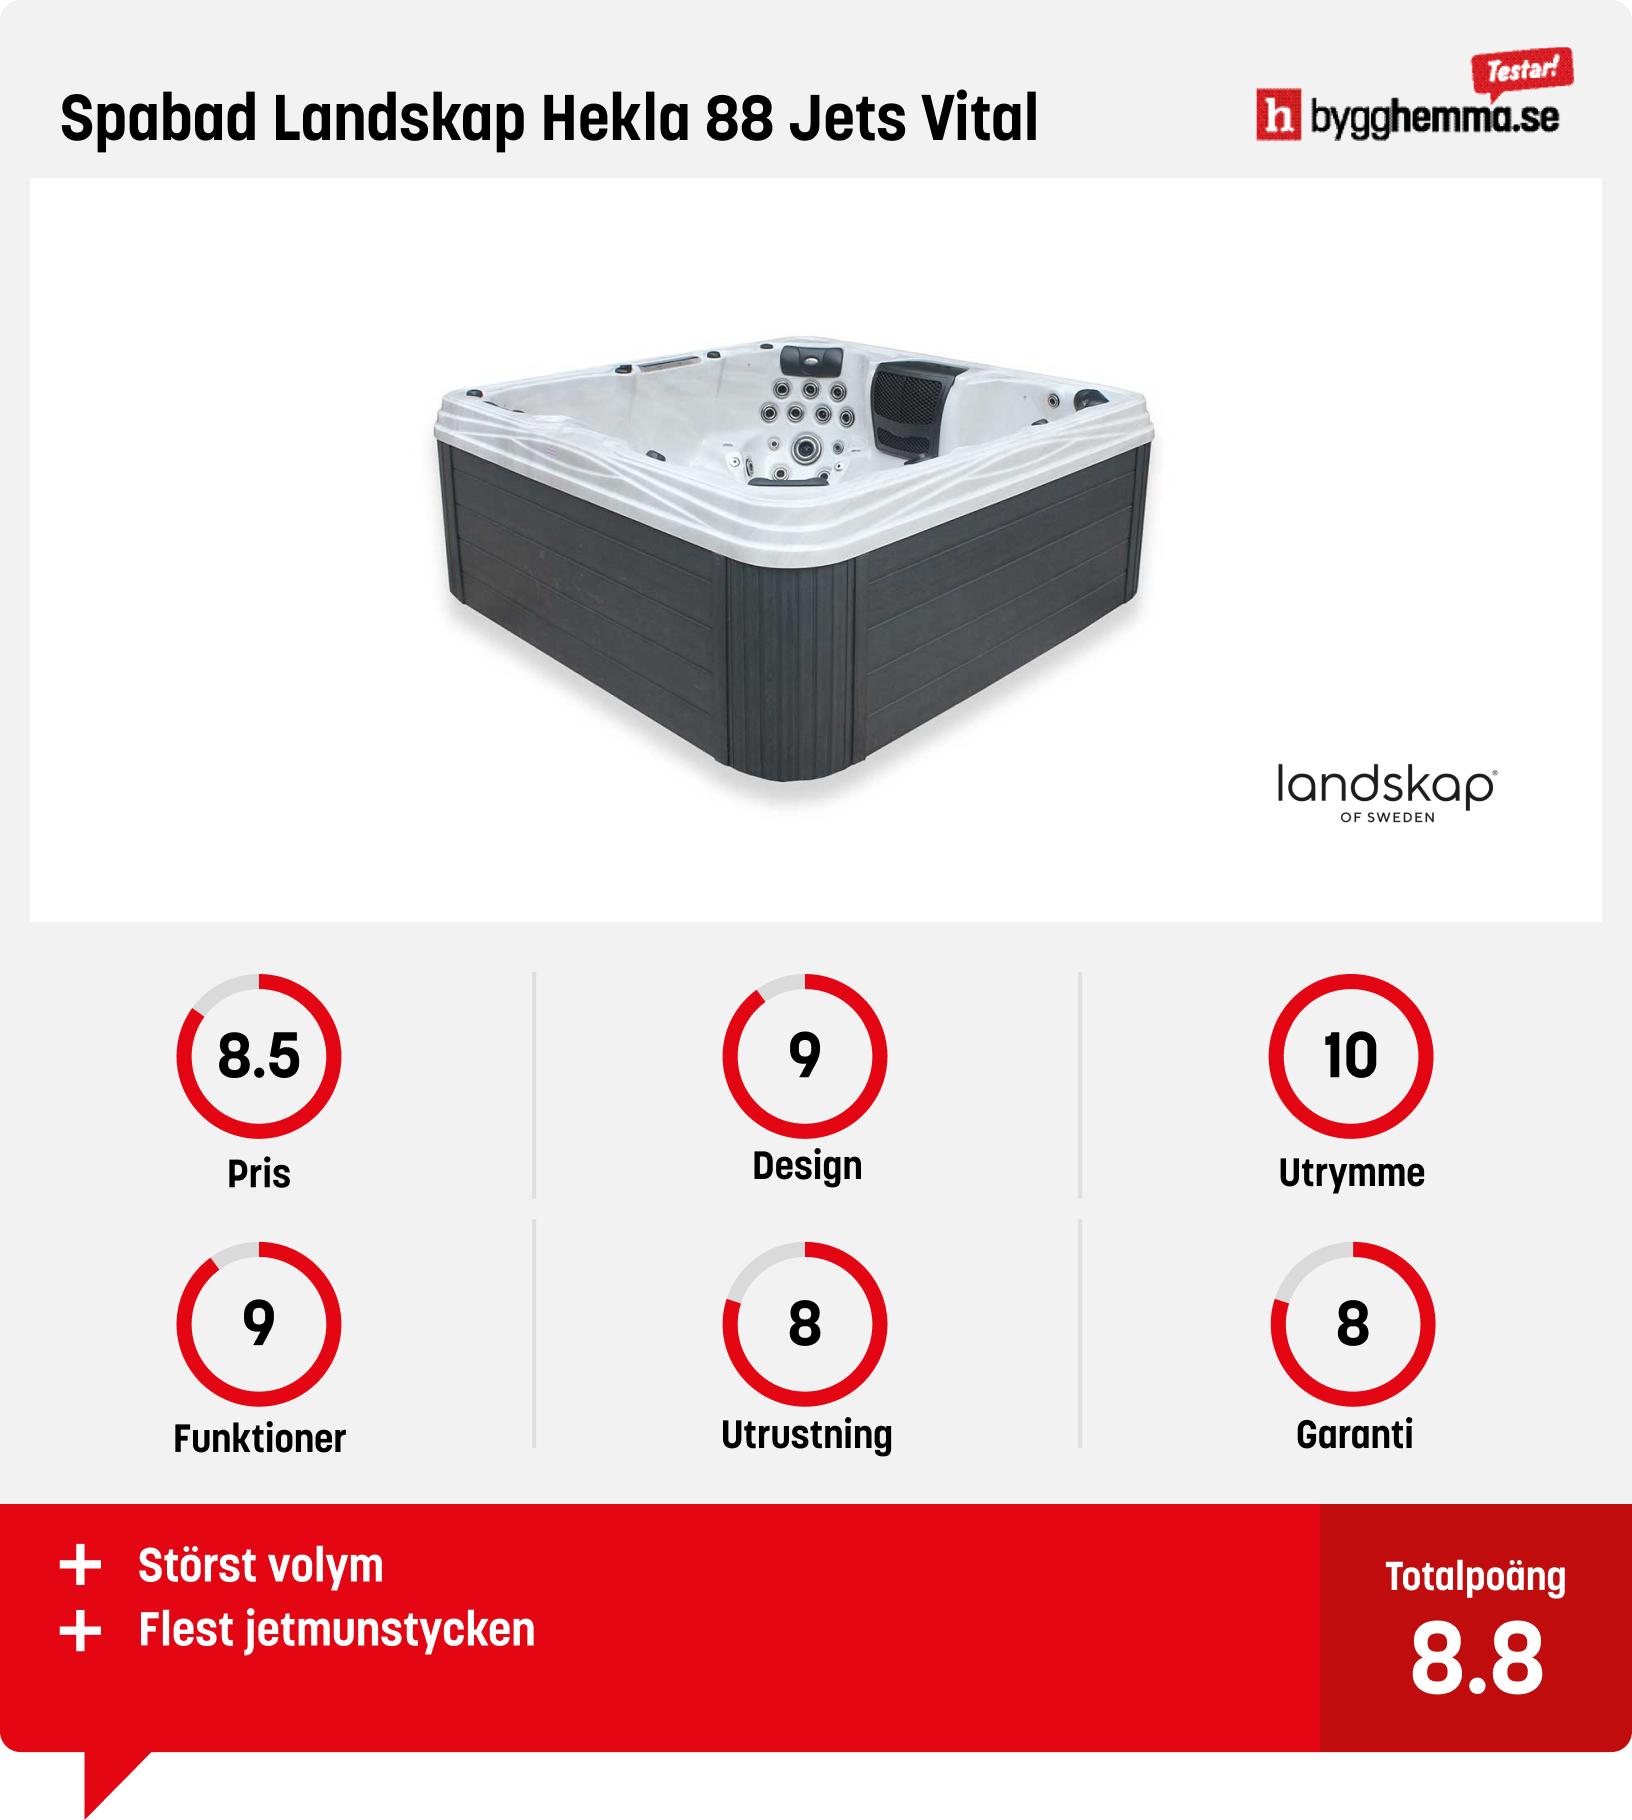 Spabad bäst i test - Spabad Landskap Hekla 88 Jets Vital